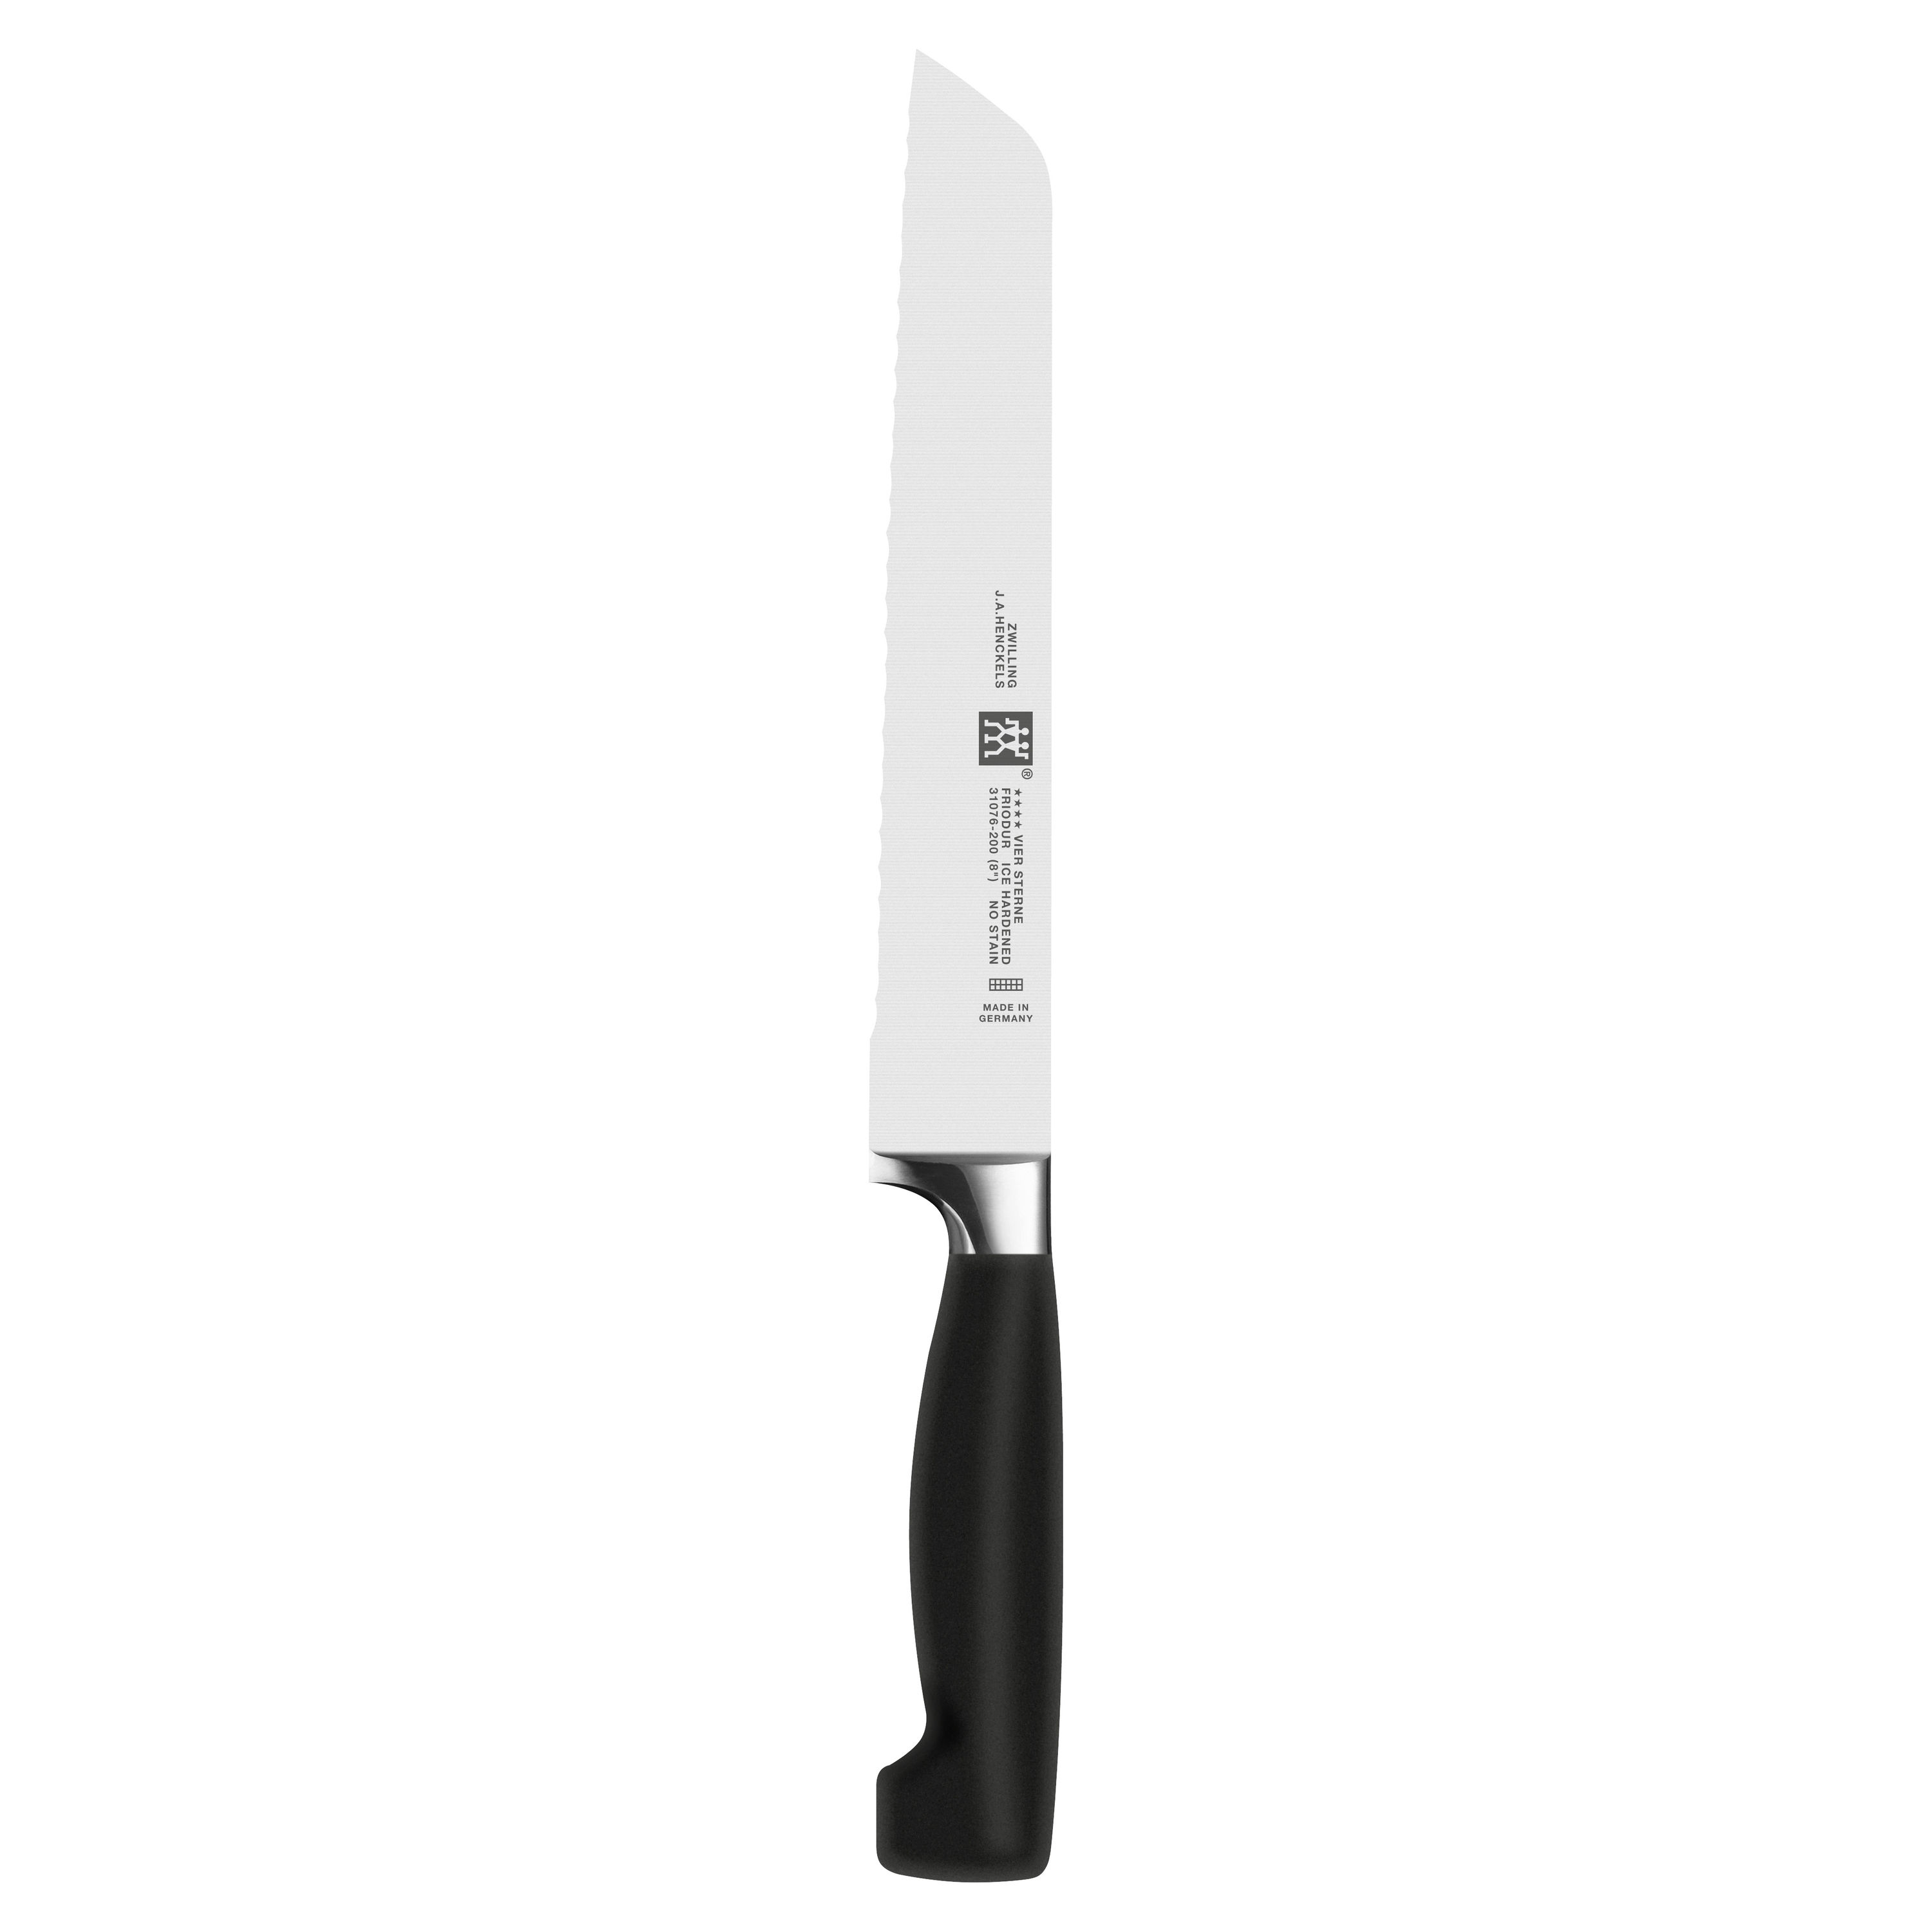 Table Knife Set 4/6/8Pcs Black Matte Comfort Handle Paring Knives